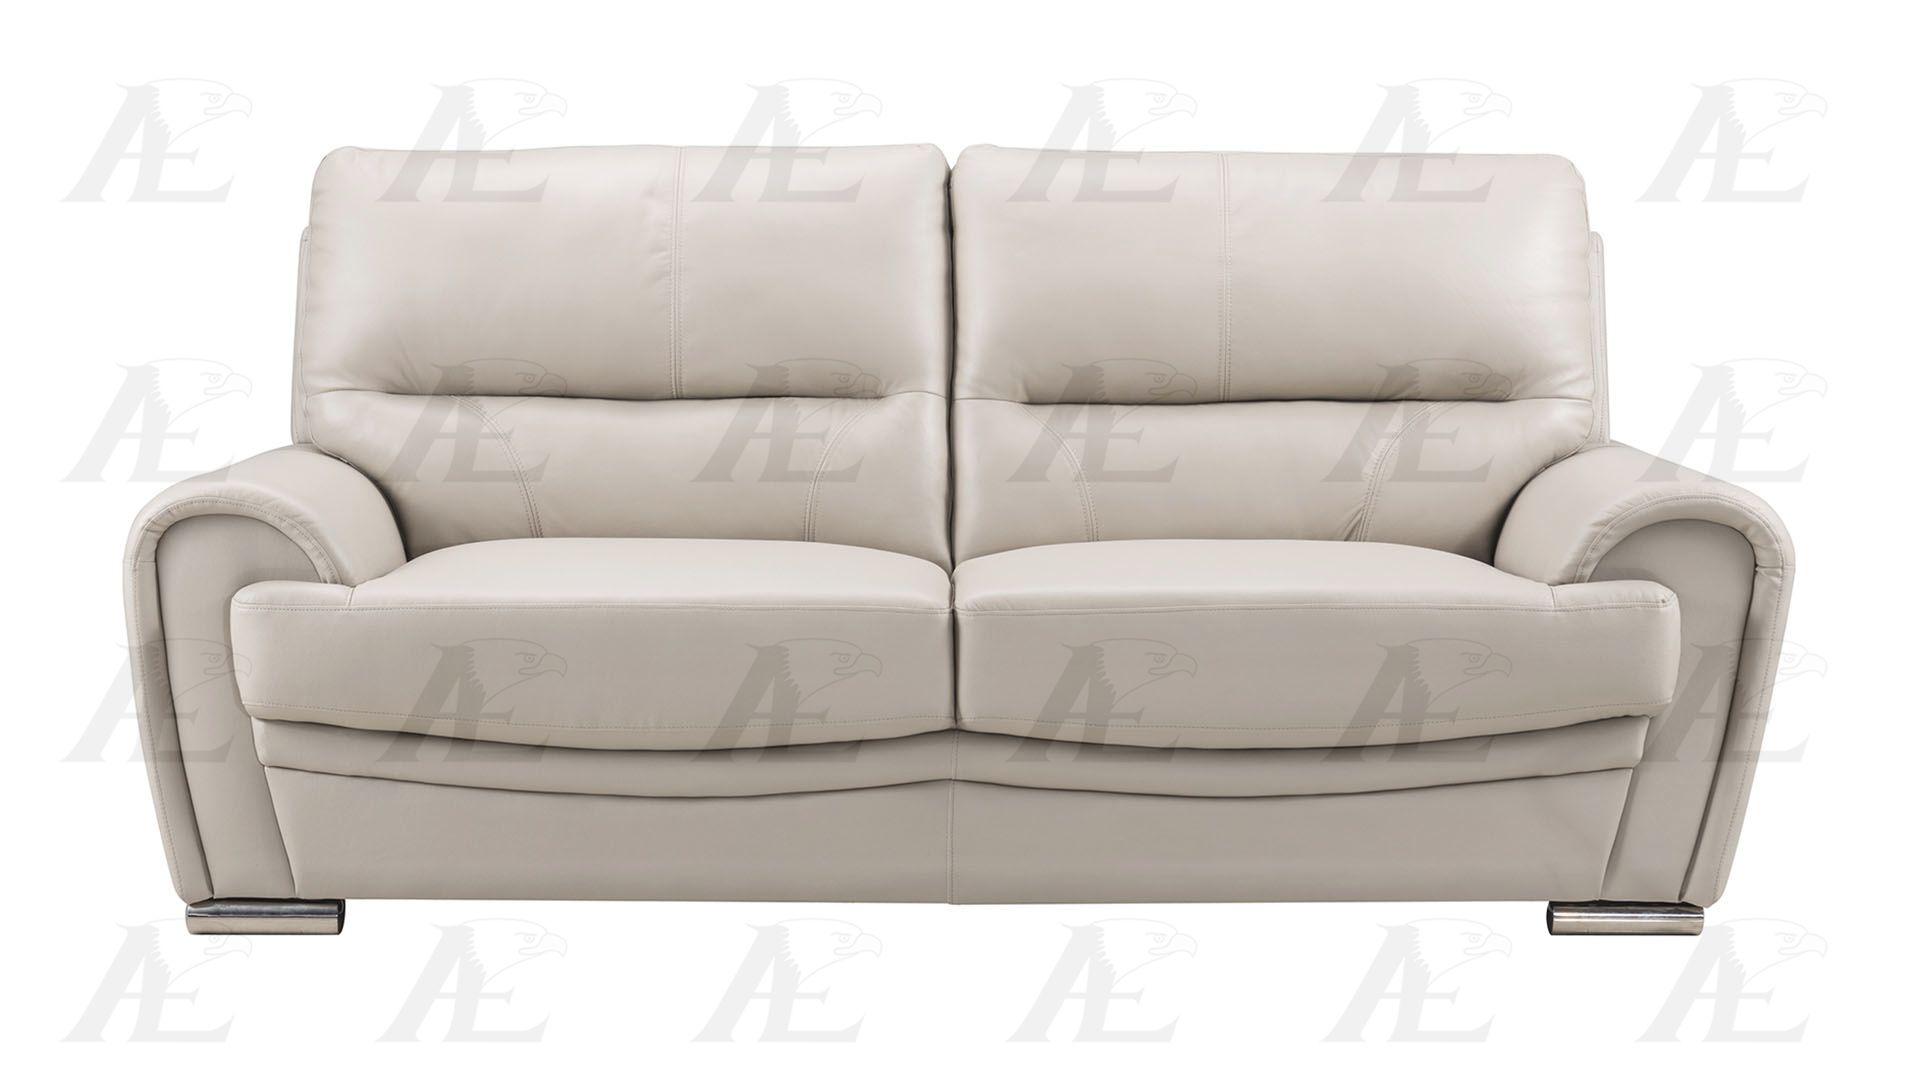 

    
American Eagle Furniture EK522-LG Sofa and Loveseat Set Light Gray EK522-LG Set-2
